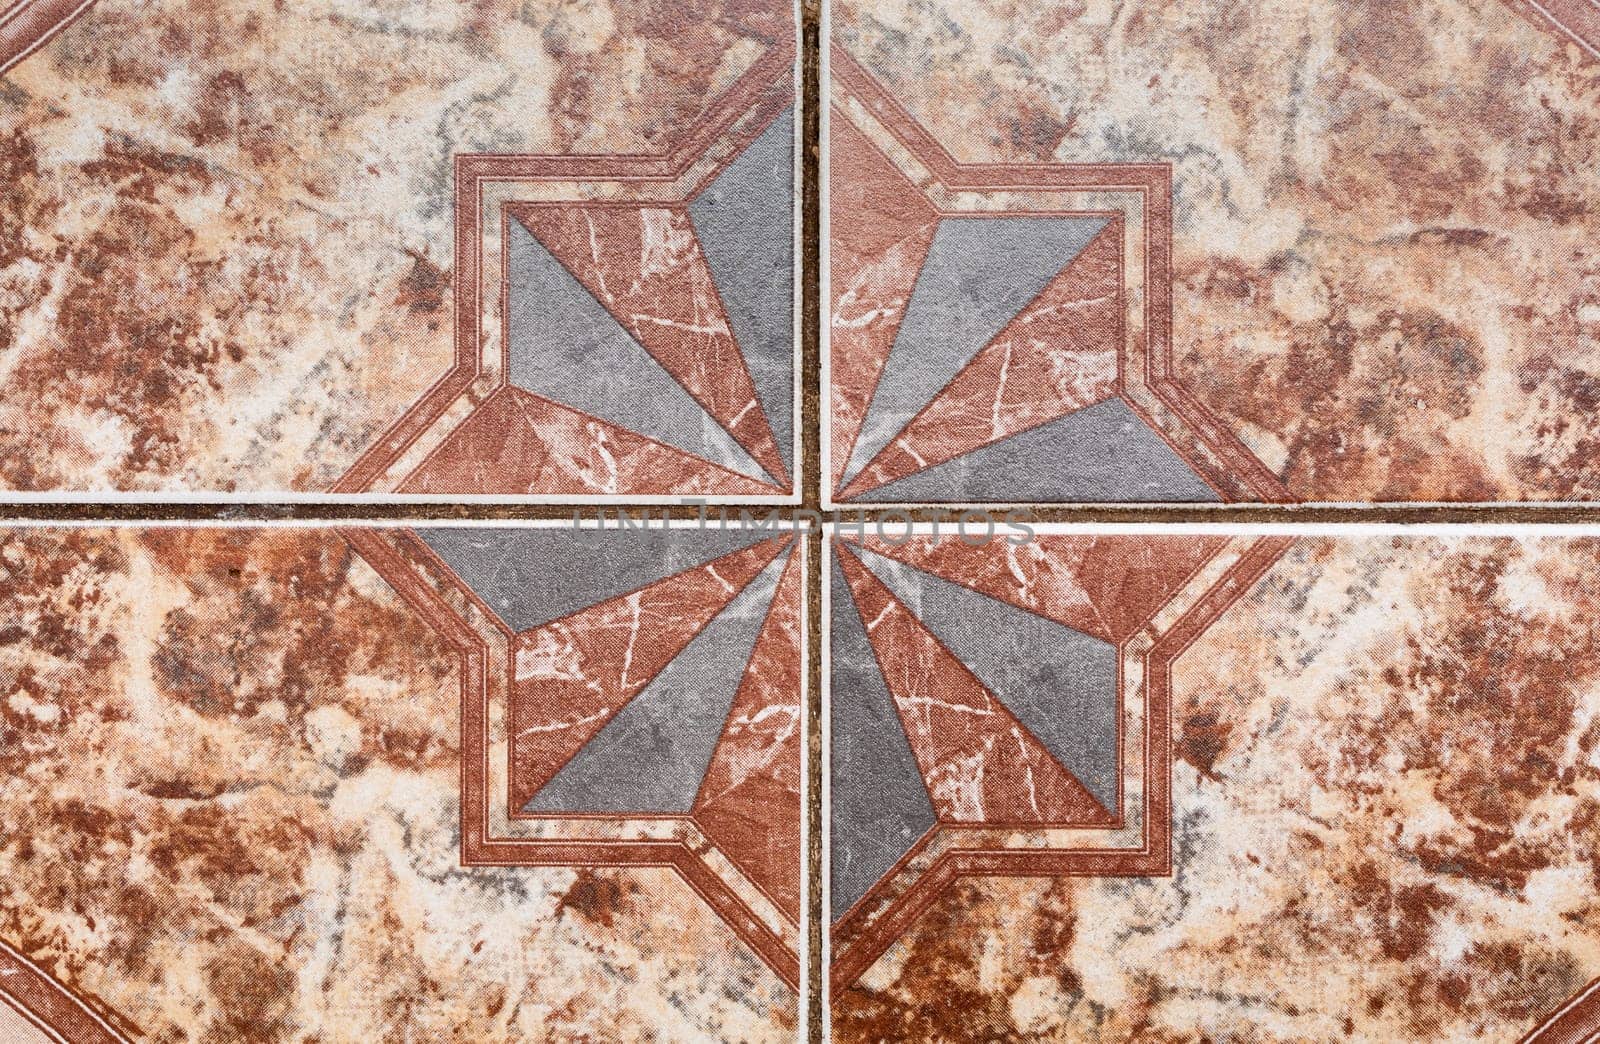 tile pattern of ancient ceramic tiles. background